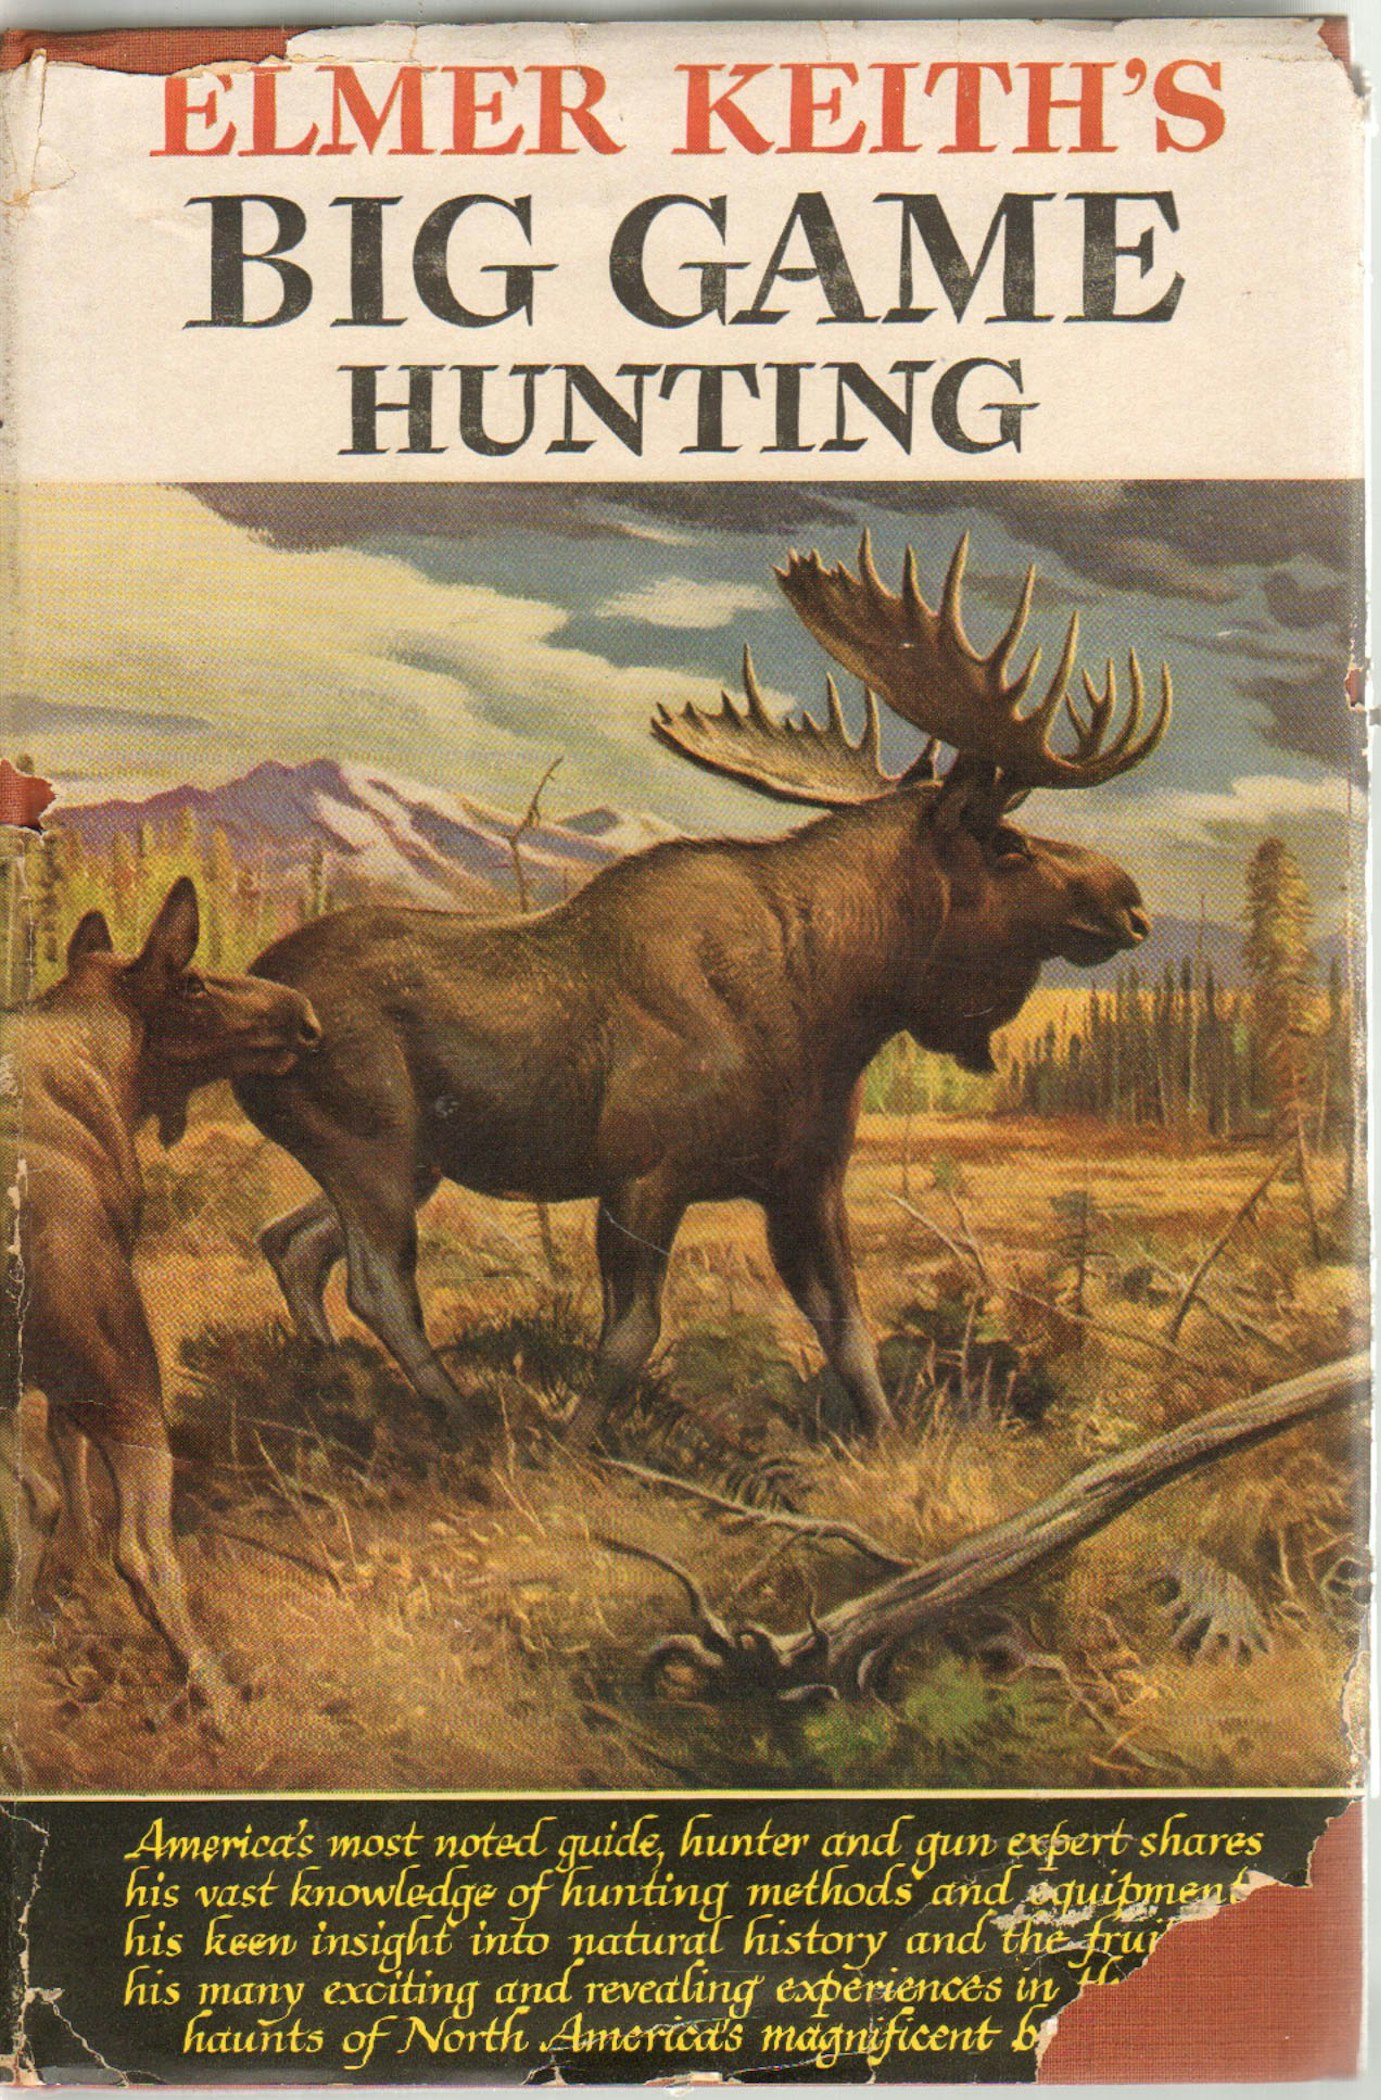 1954 "Big Game Hunting" by Elmer Keith EBTH